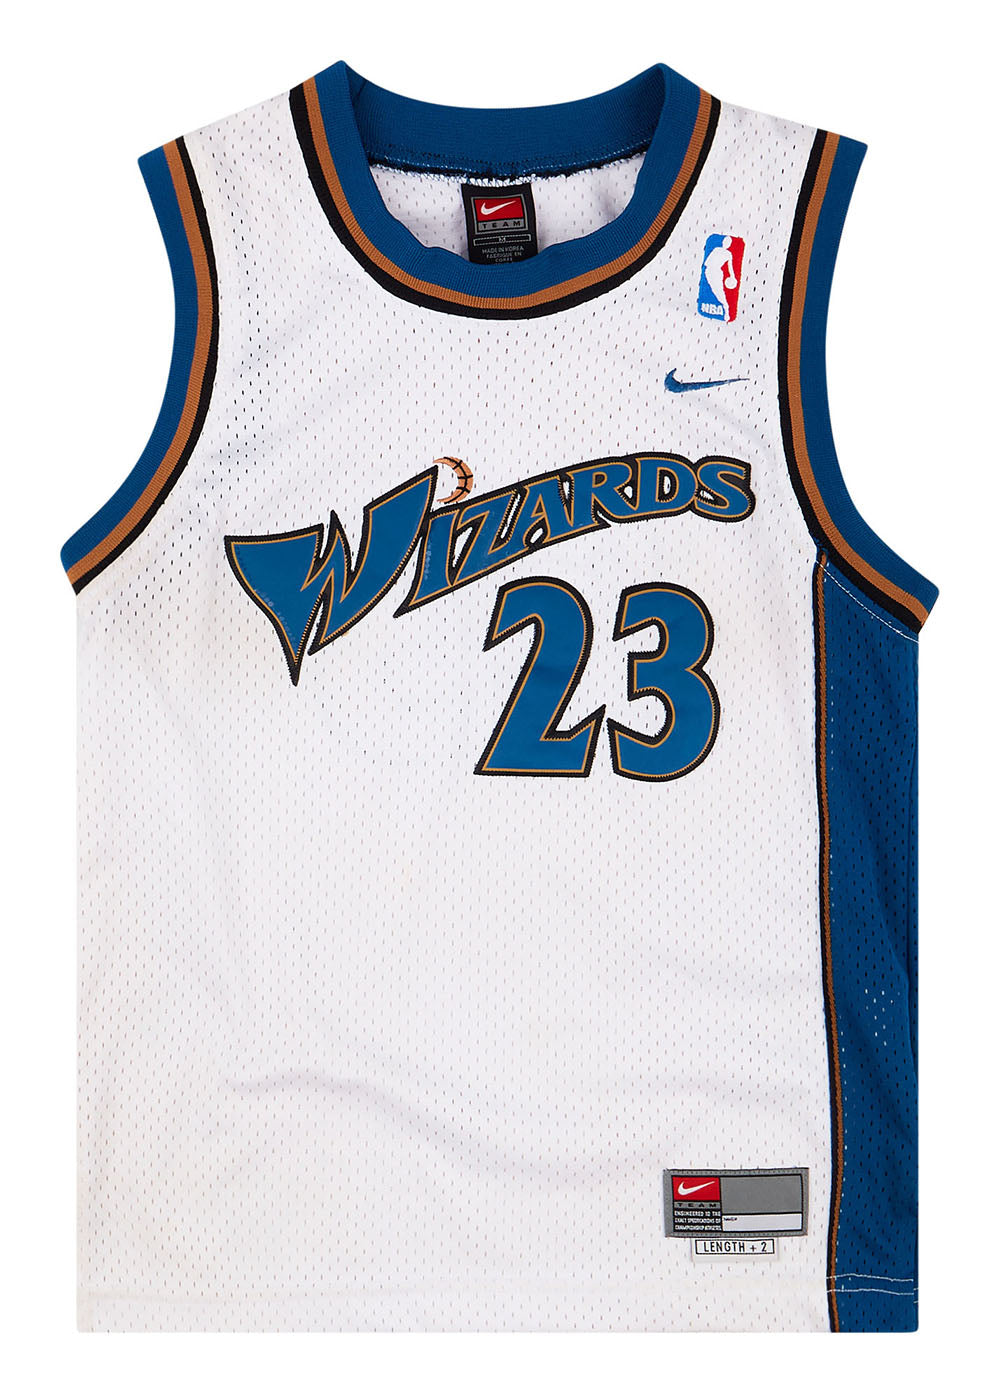 Nike NBA Michael Jordan #23 Washington Wizards Jersey With Screen